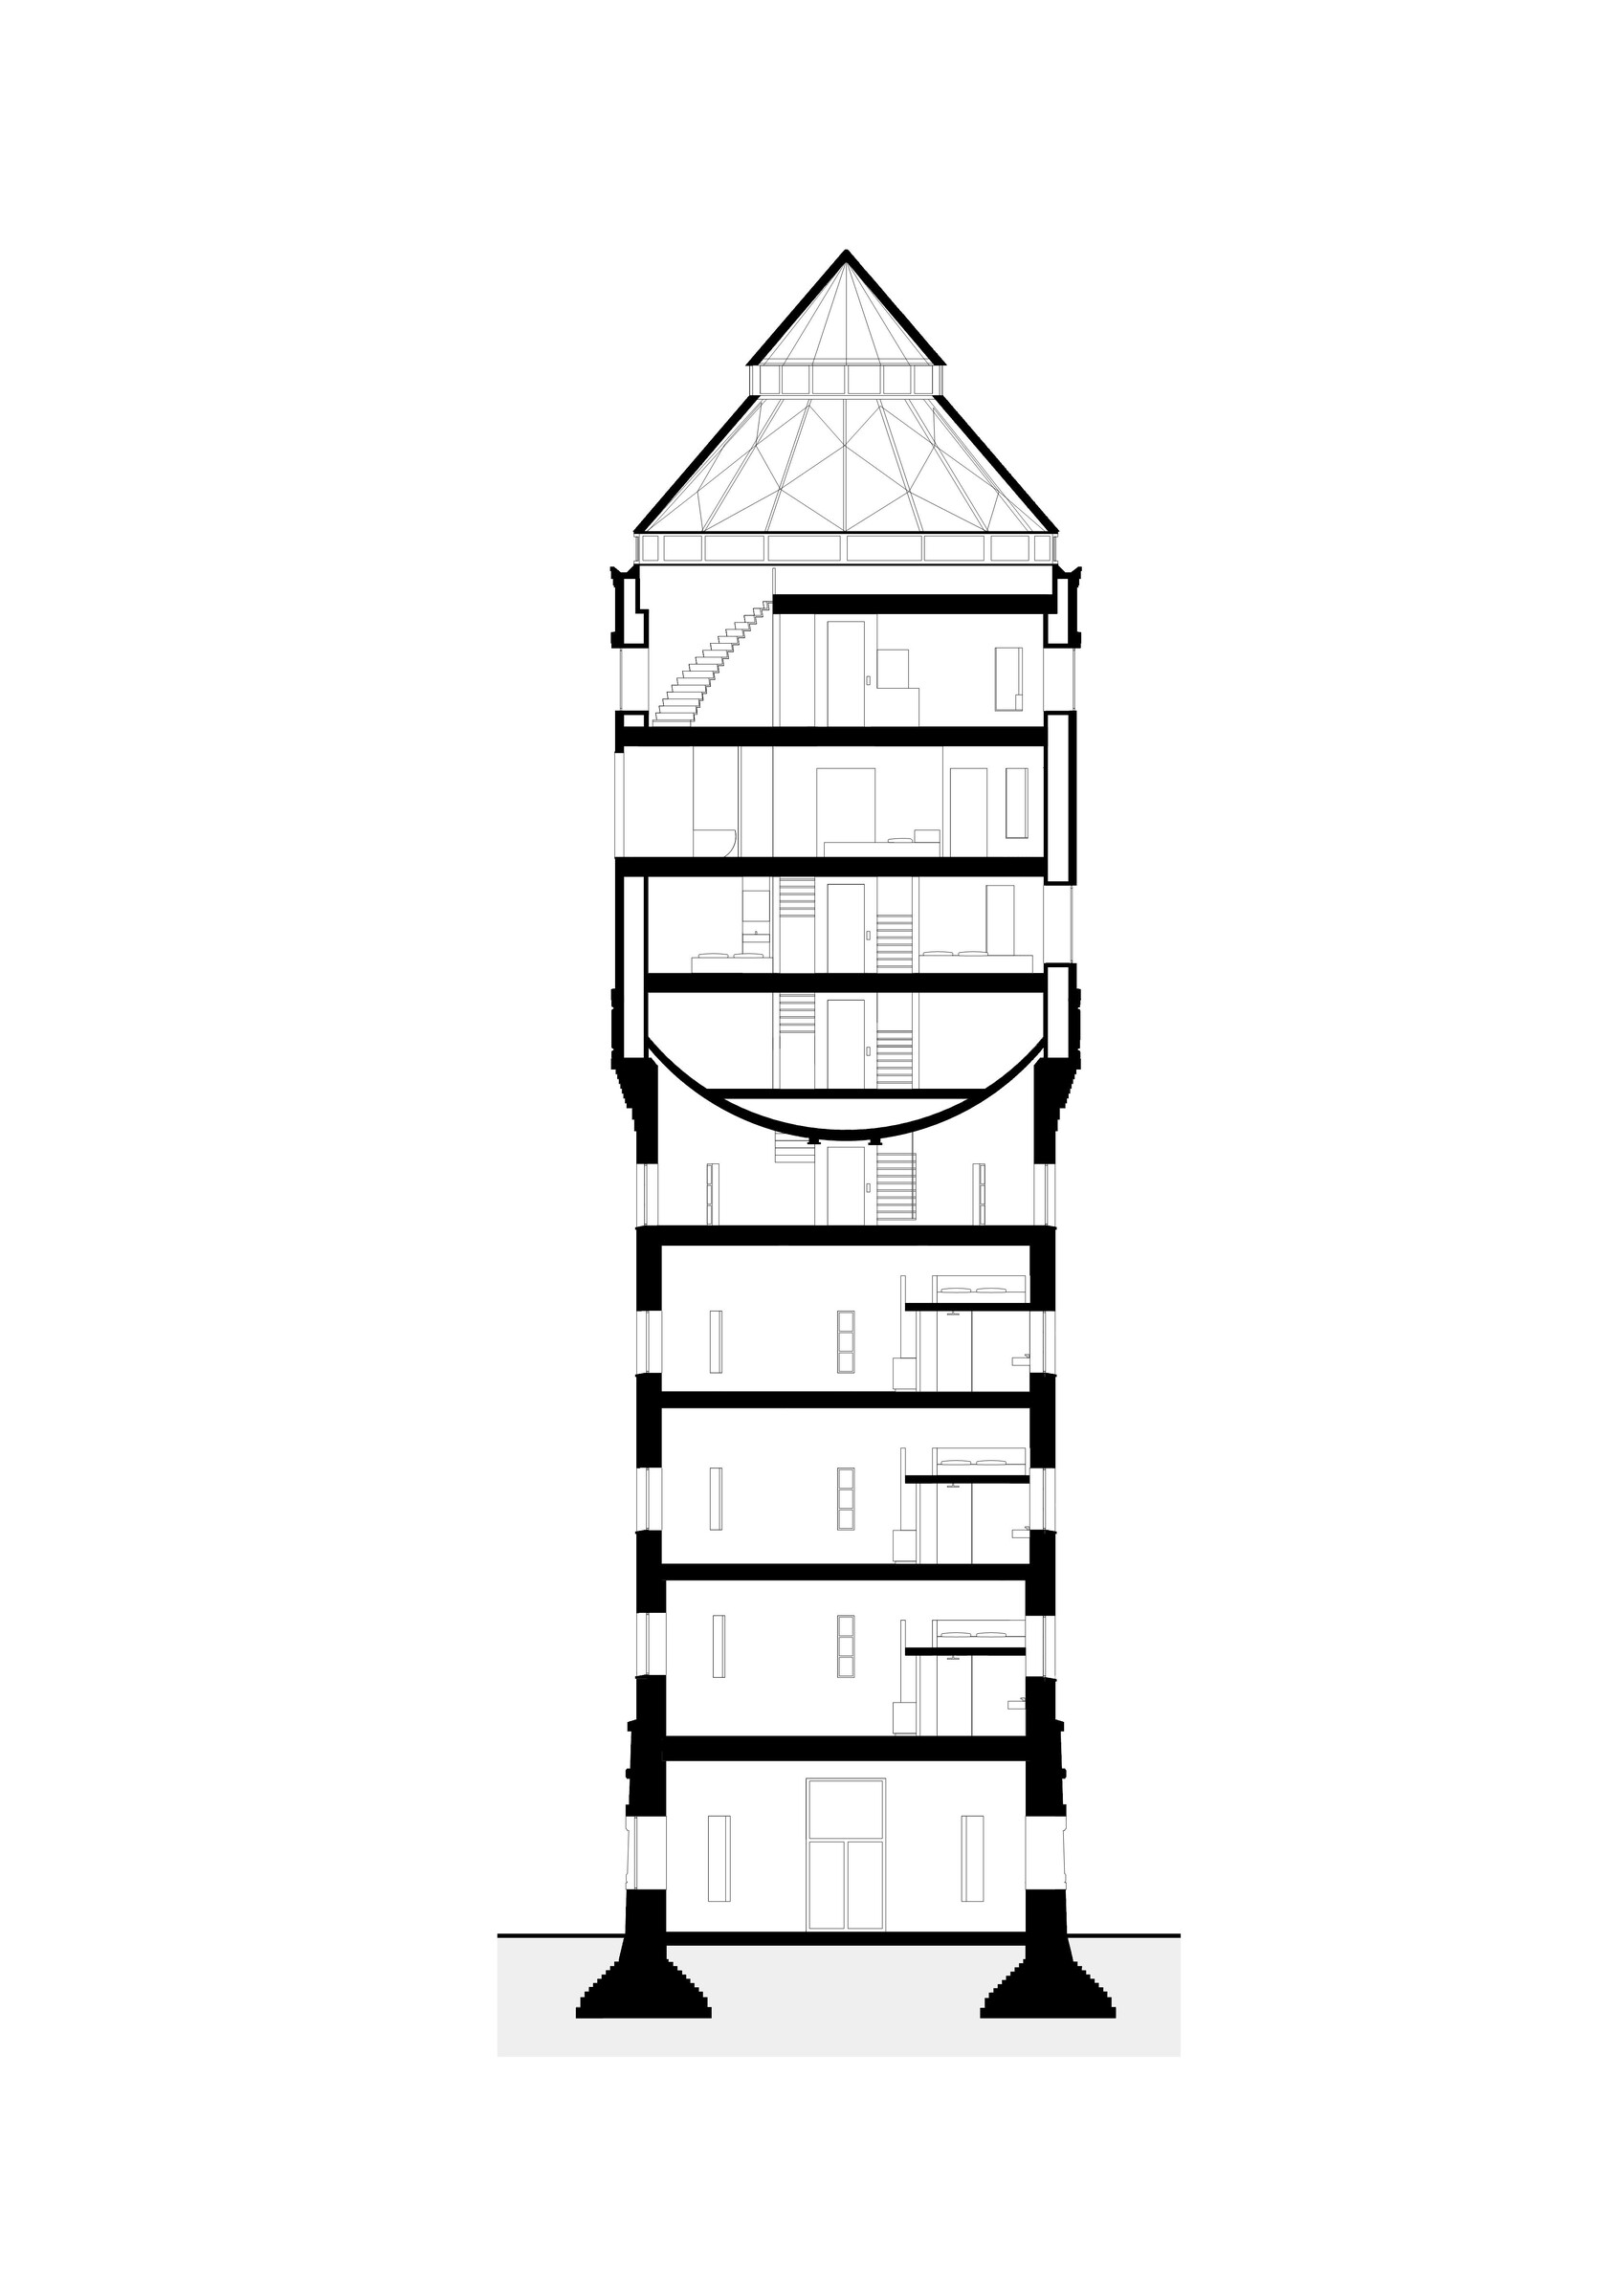 2Zecc_Architecten-transformation-Water_tower-housing.jpg